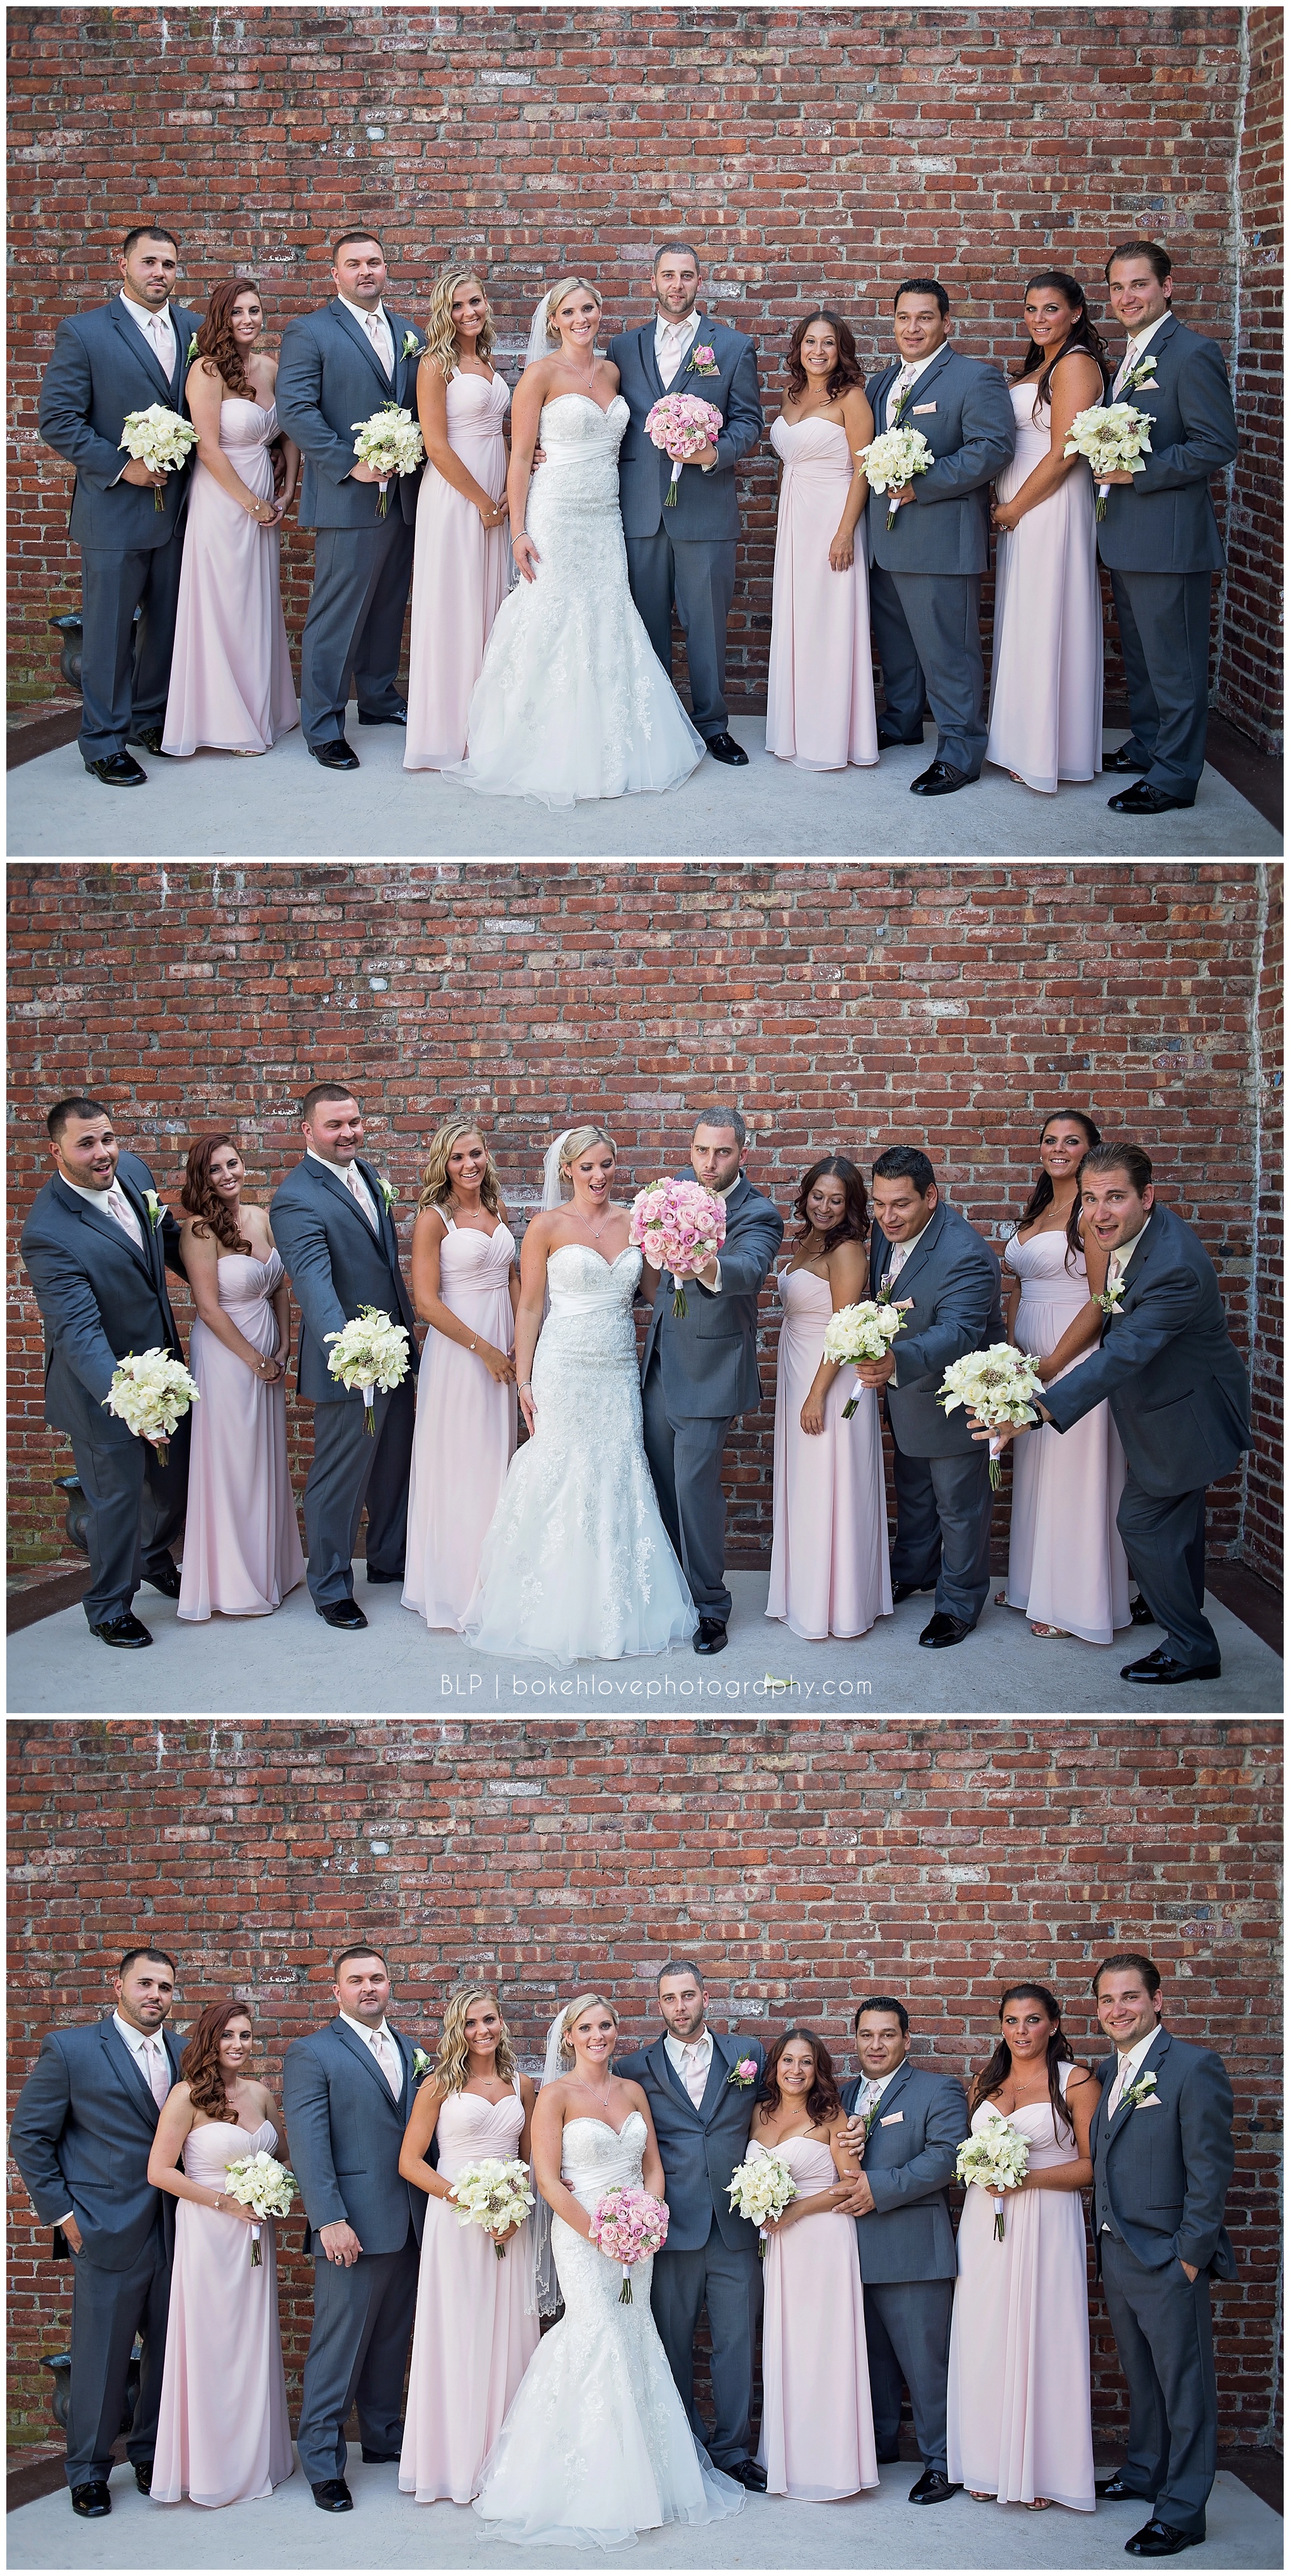 Doolan's Shore Club, South Jersey Wedding, Bokeh Love Photography, New Jersey Professional Wedding Photographer